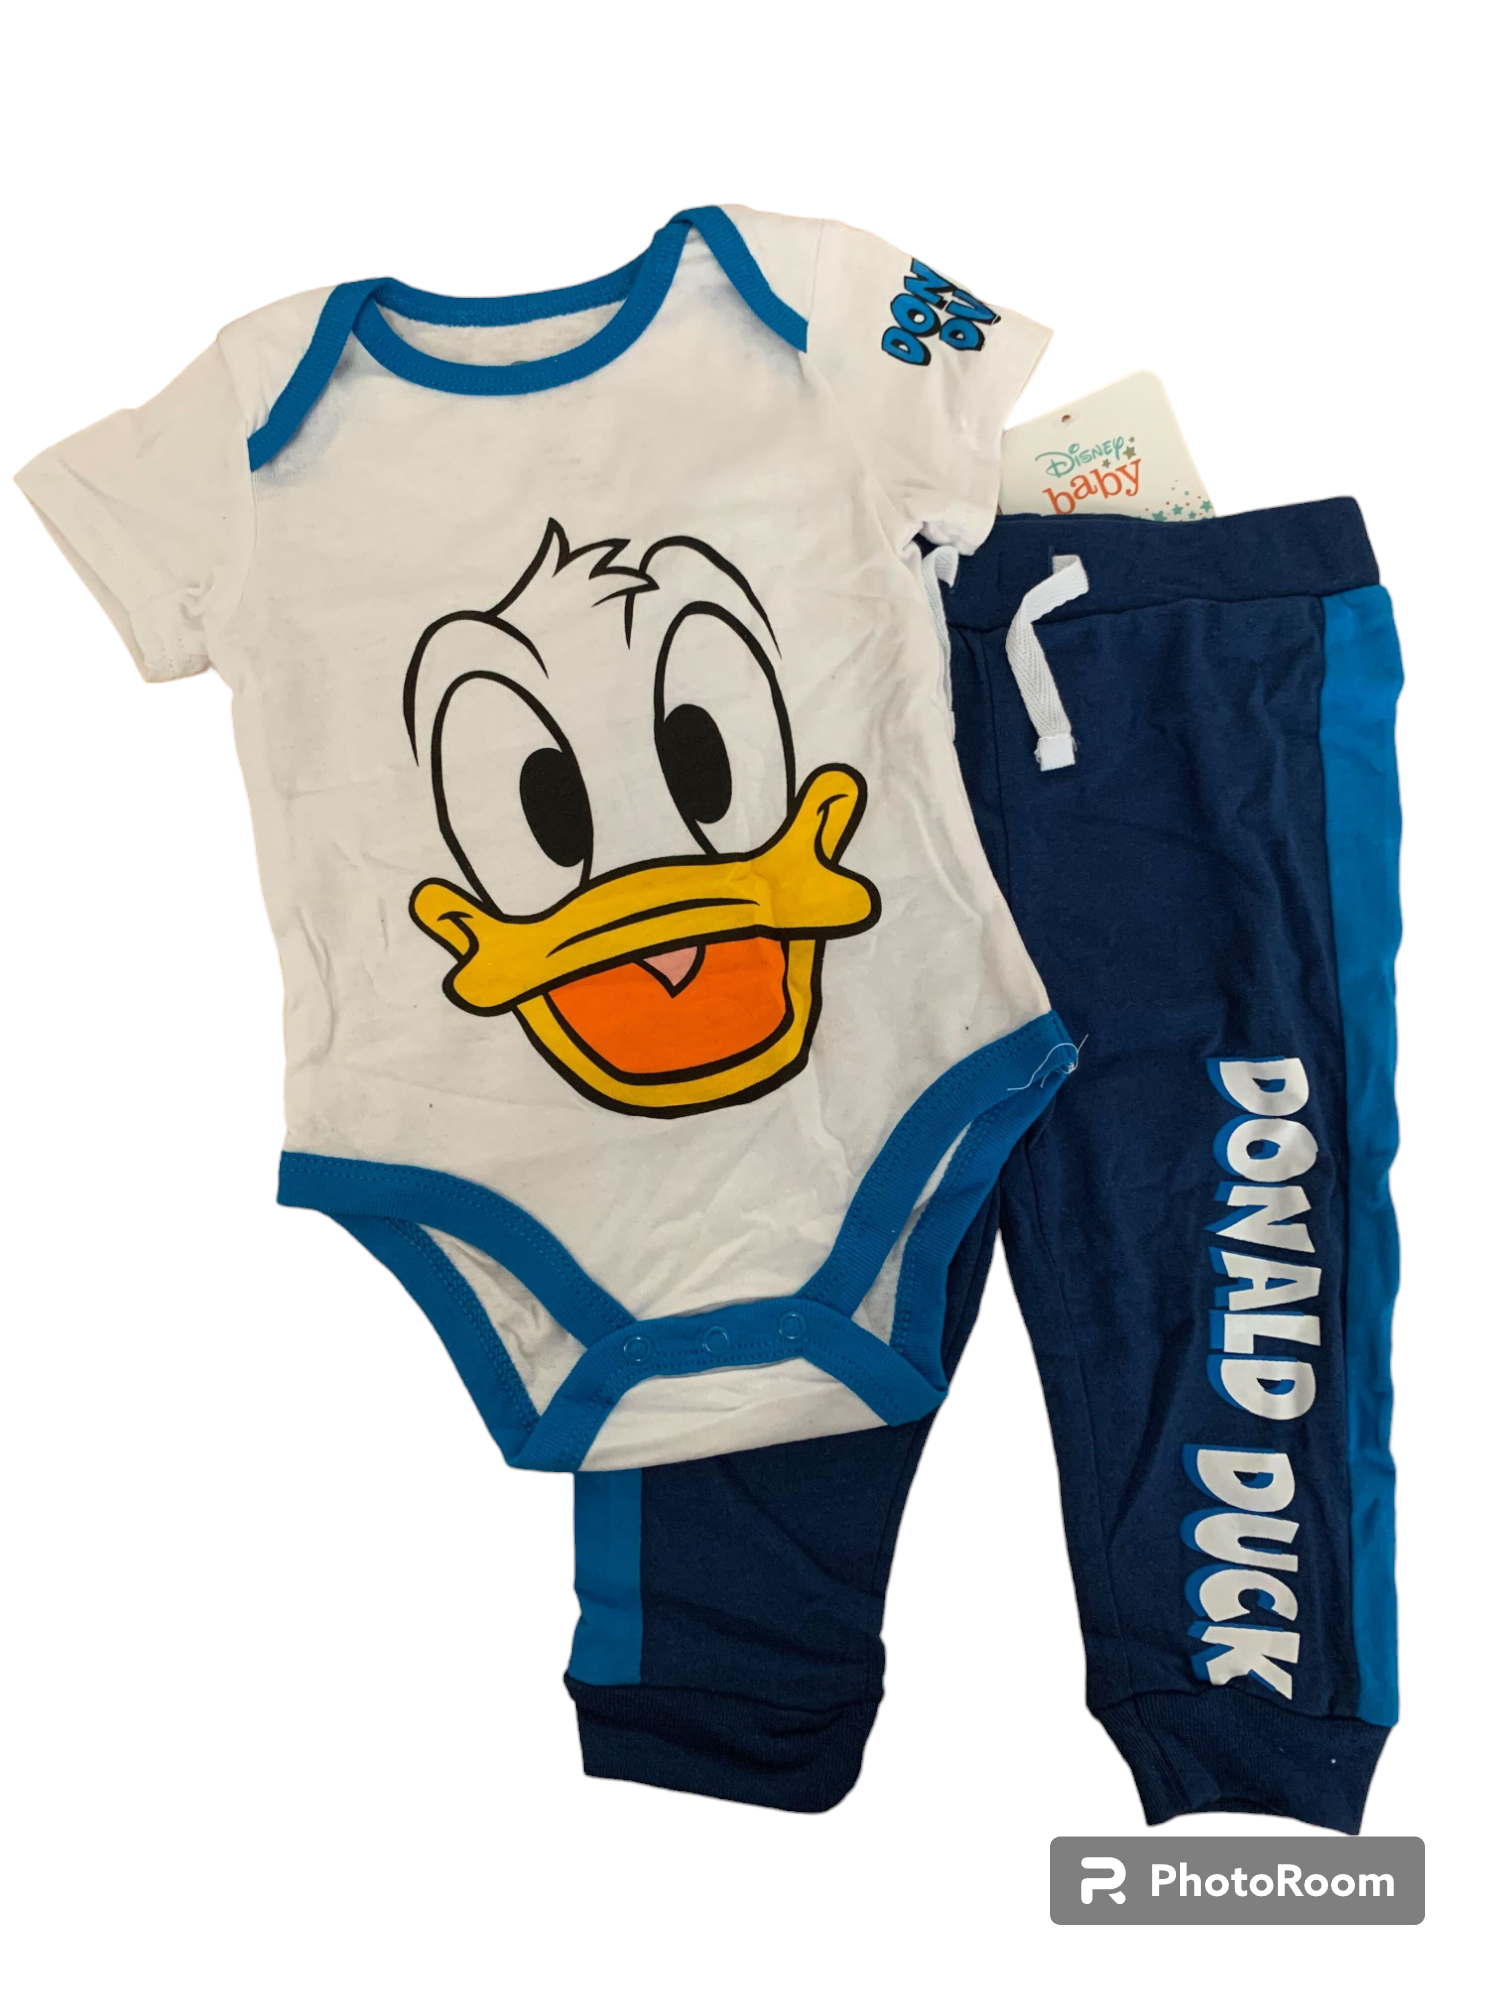 Disney Donlad Duck Infant Onesie with Blue Pants